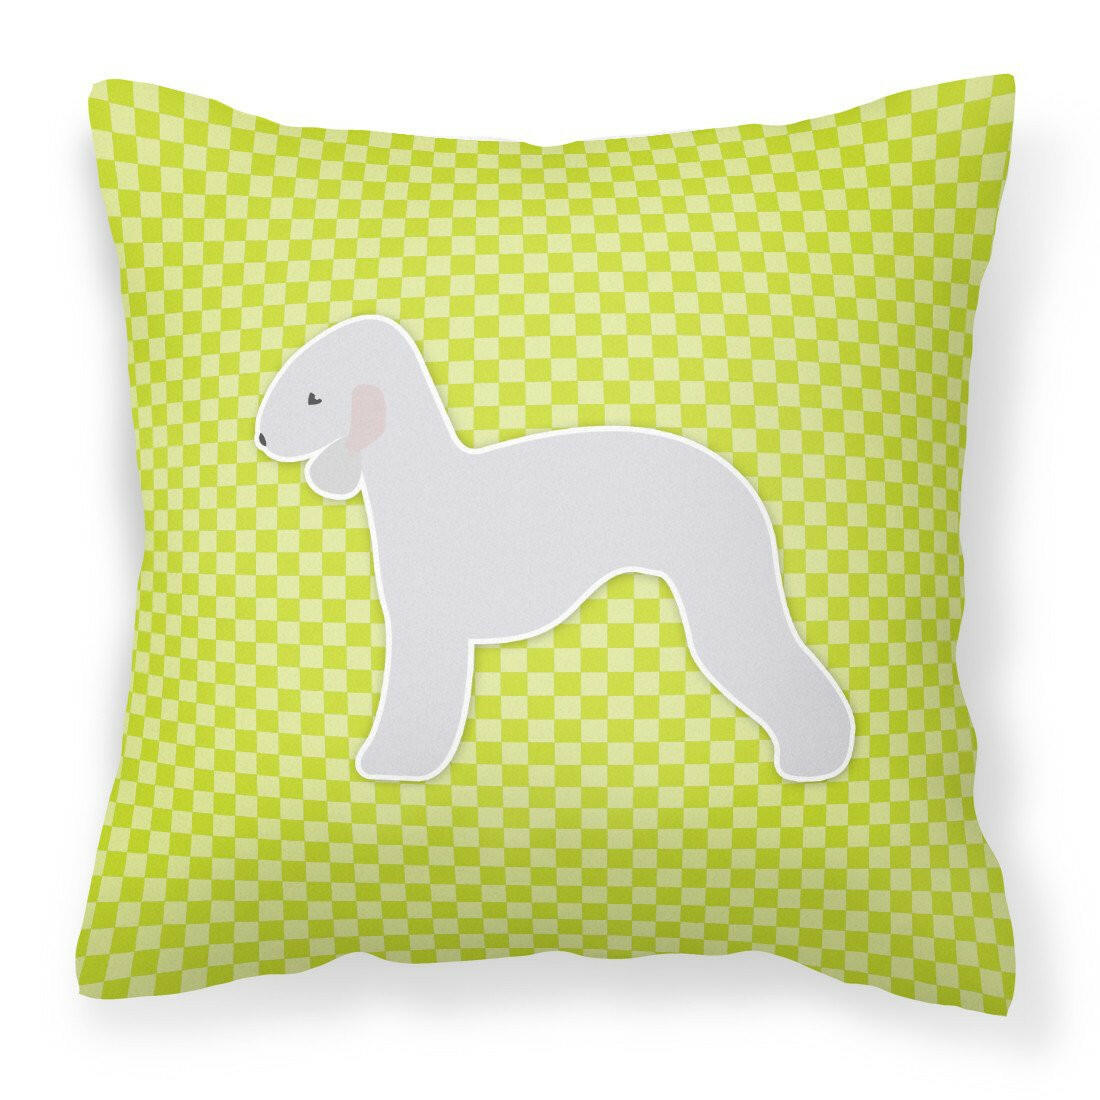 Bedlington Terrier Checkerboard Green Fabric Decorative Pillow BB3794PW1818 by Caroline's Treasures